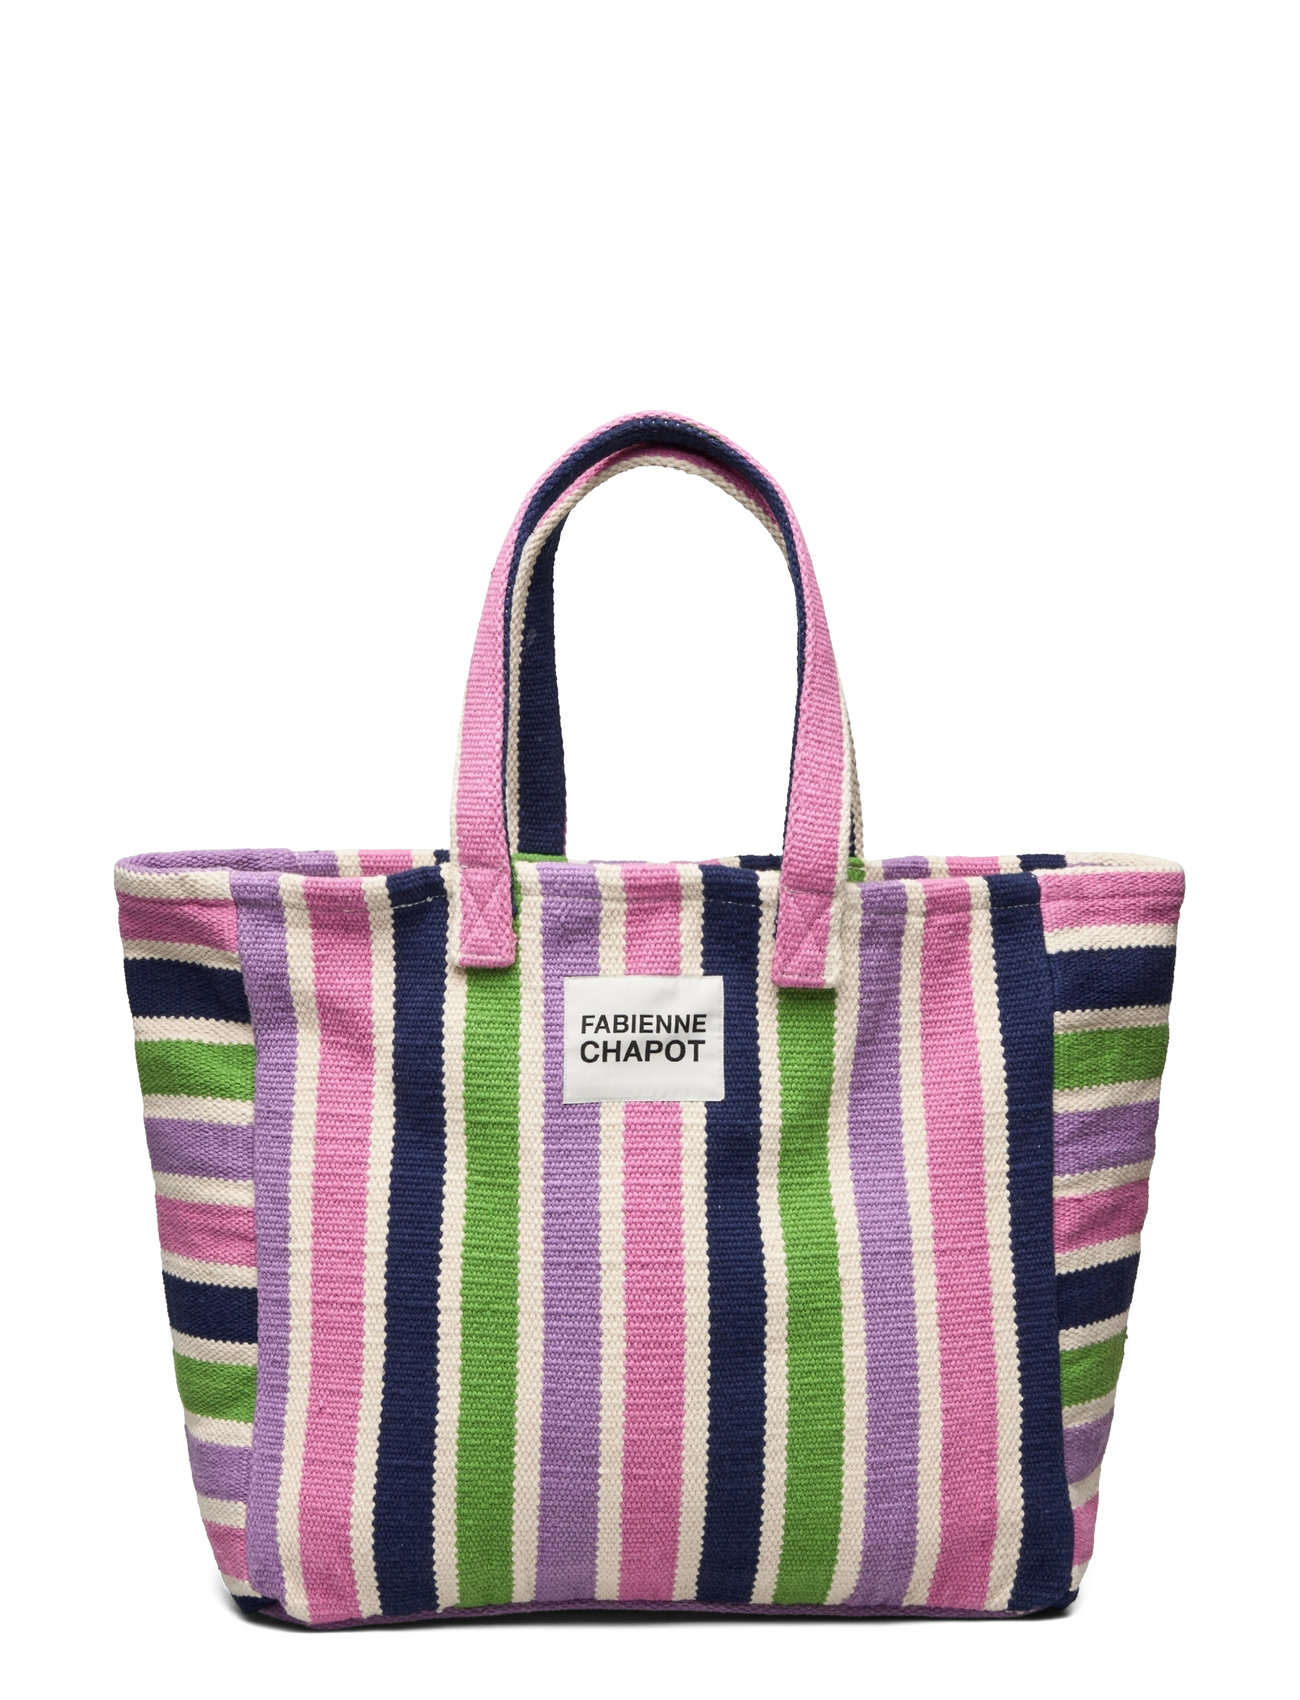 Fabienne Chapot Rainbow Tote Bag - Shoppere & Tote Bags - Boozt.com